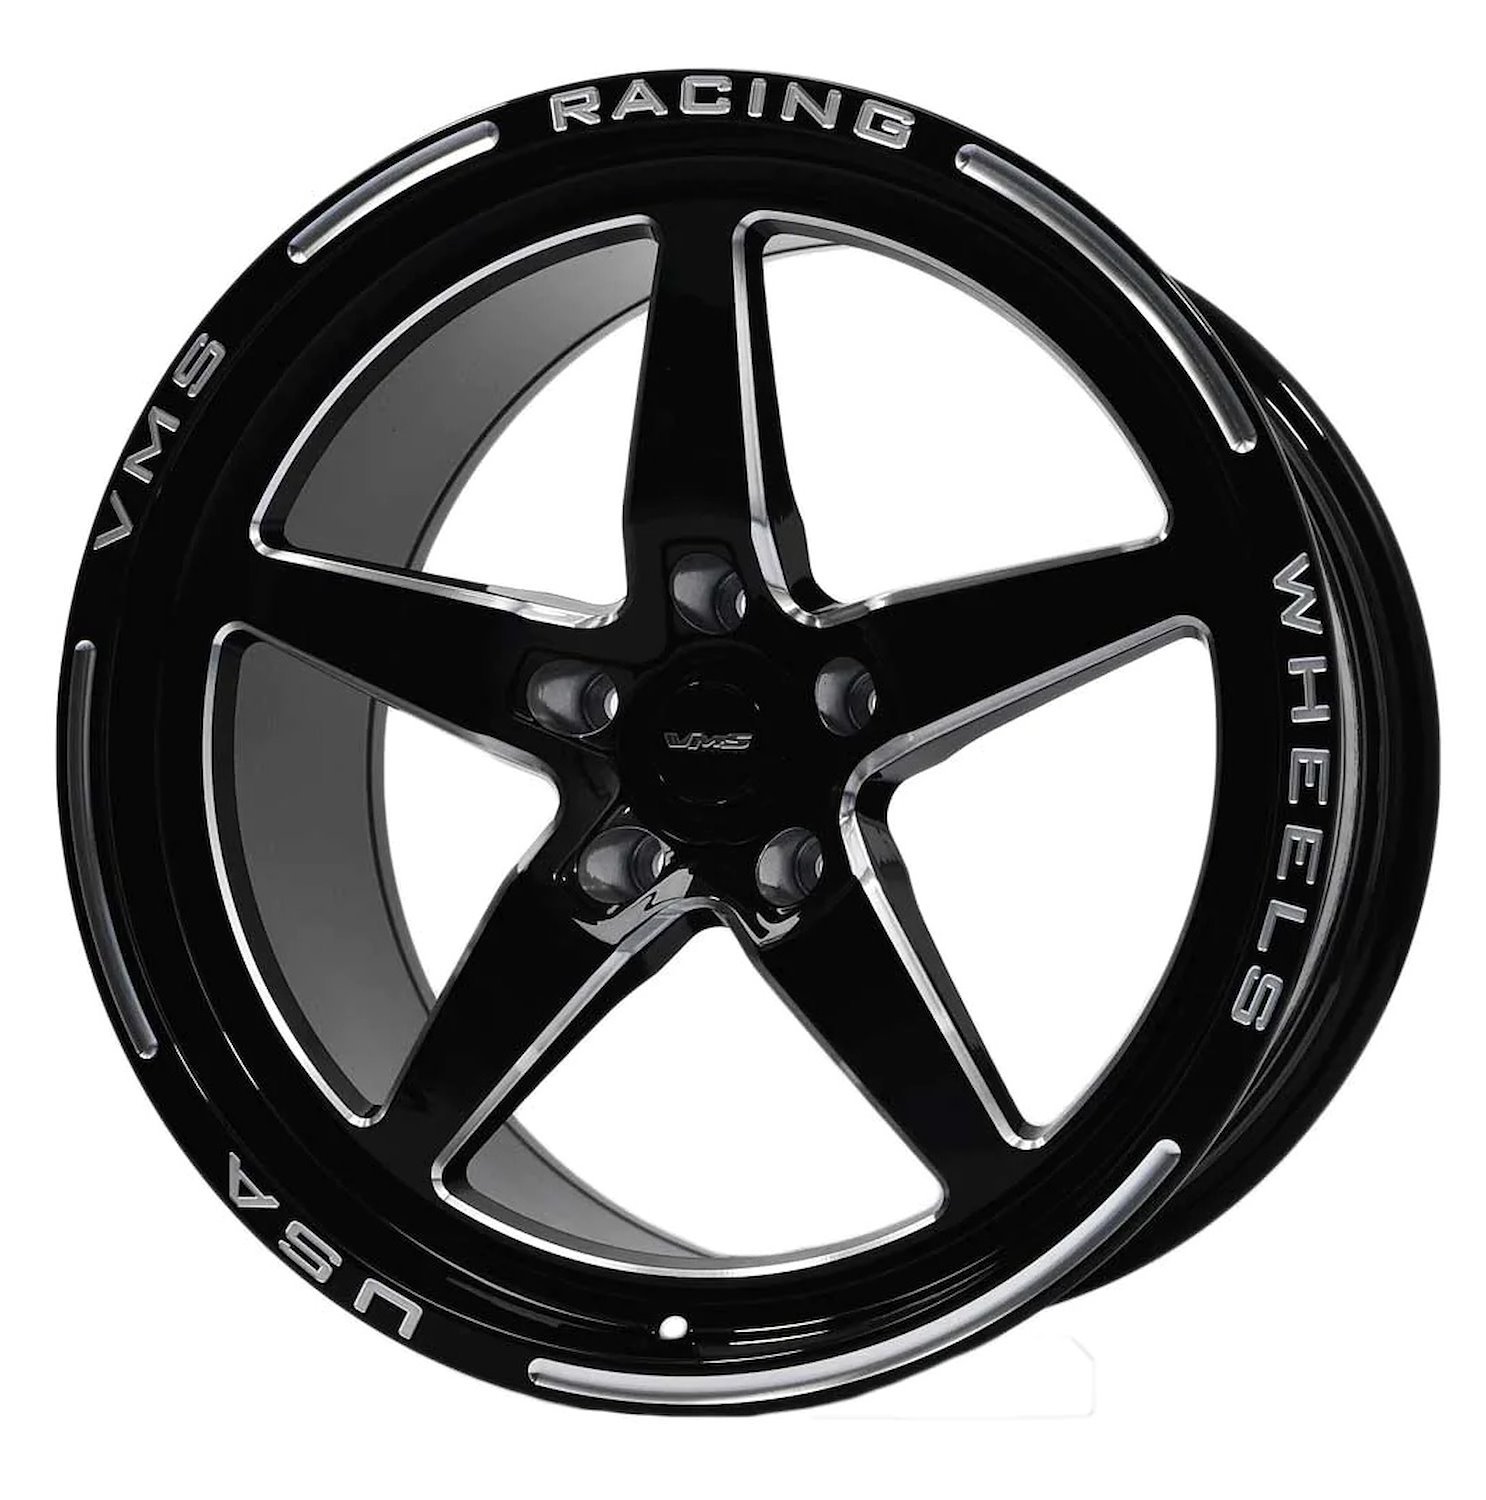 VWST036 V-Star Wheel, Size: 18" x 9.5", Bolt Pattern: 5 x 108 mm [Finish: Gloss Black Milled]